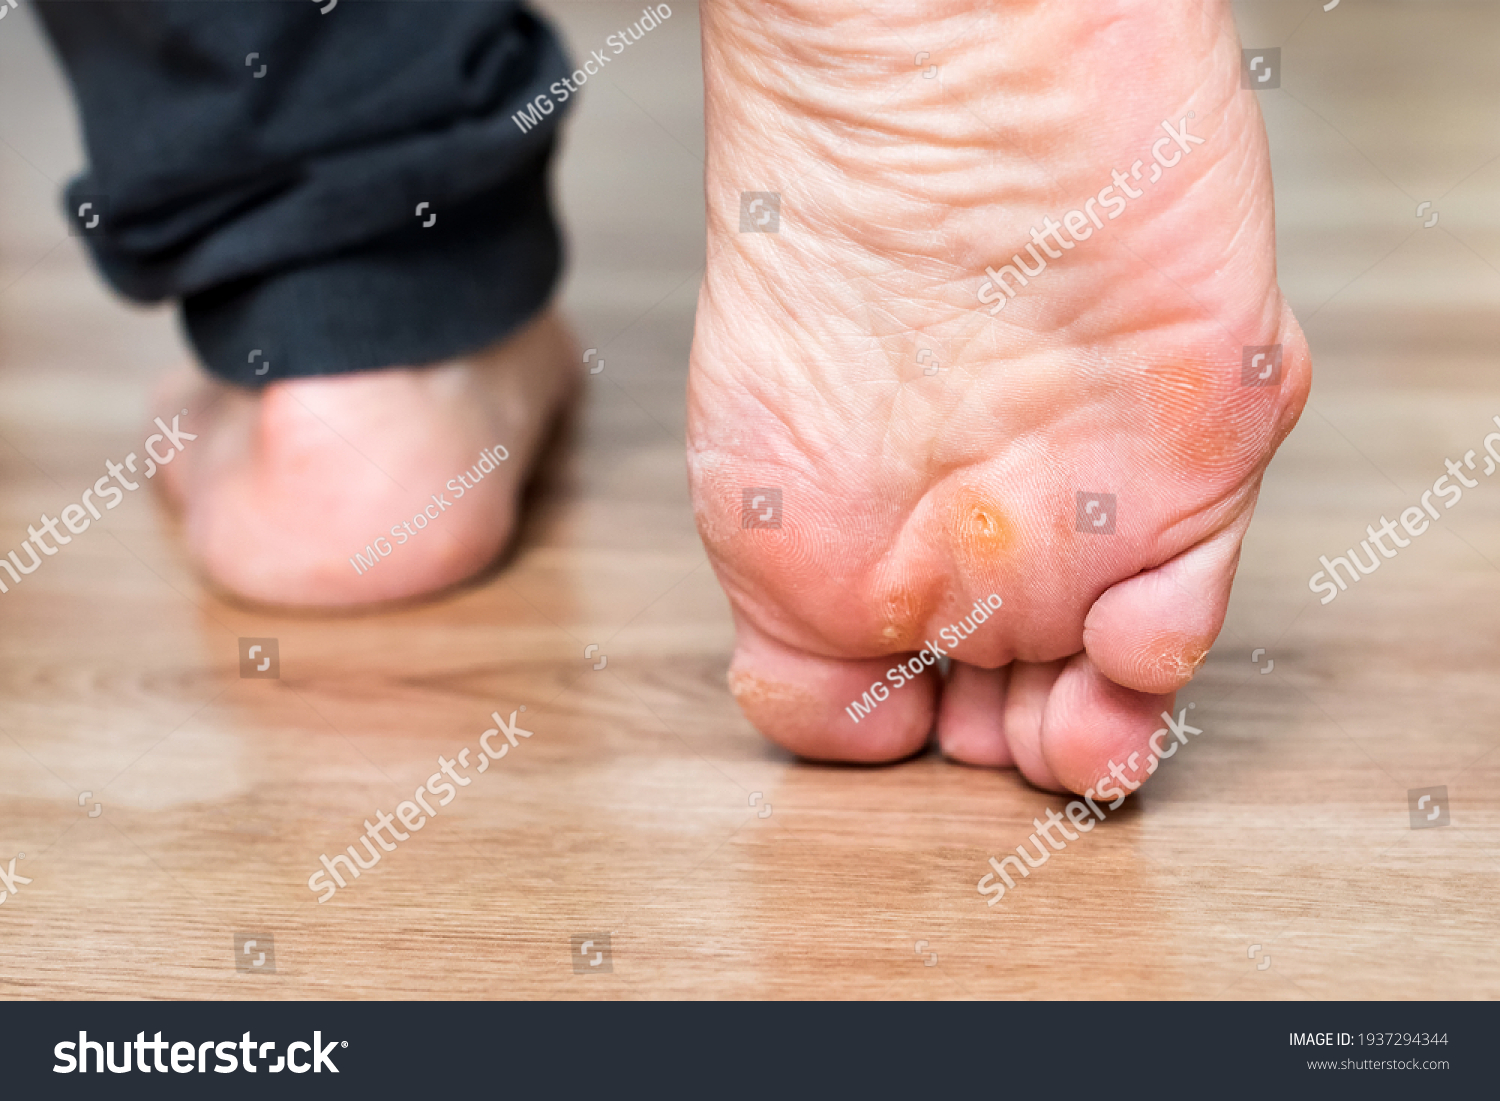 Foot with corns, calluses and dry skin, wart plantar verrucas. Verrucas papilloma callus virus, desease on foot skin. Unhealthy foot leg with corn close up. Man shows callosity before treatment. #1937294344